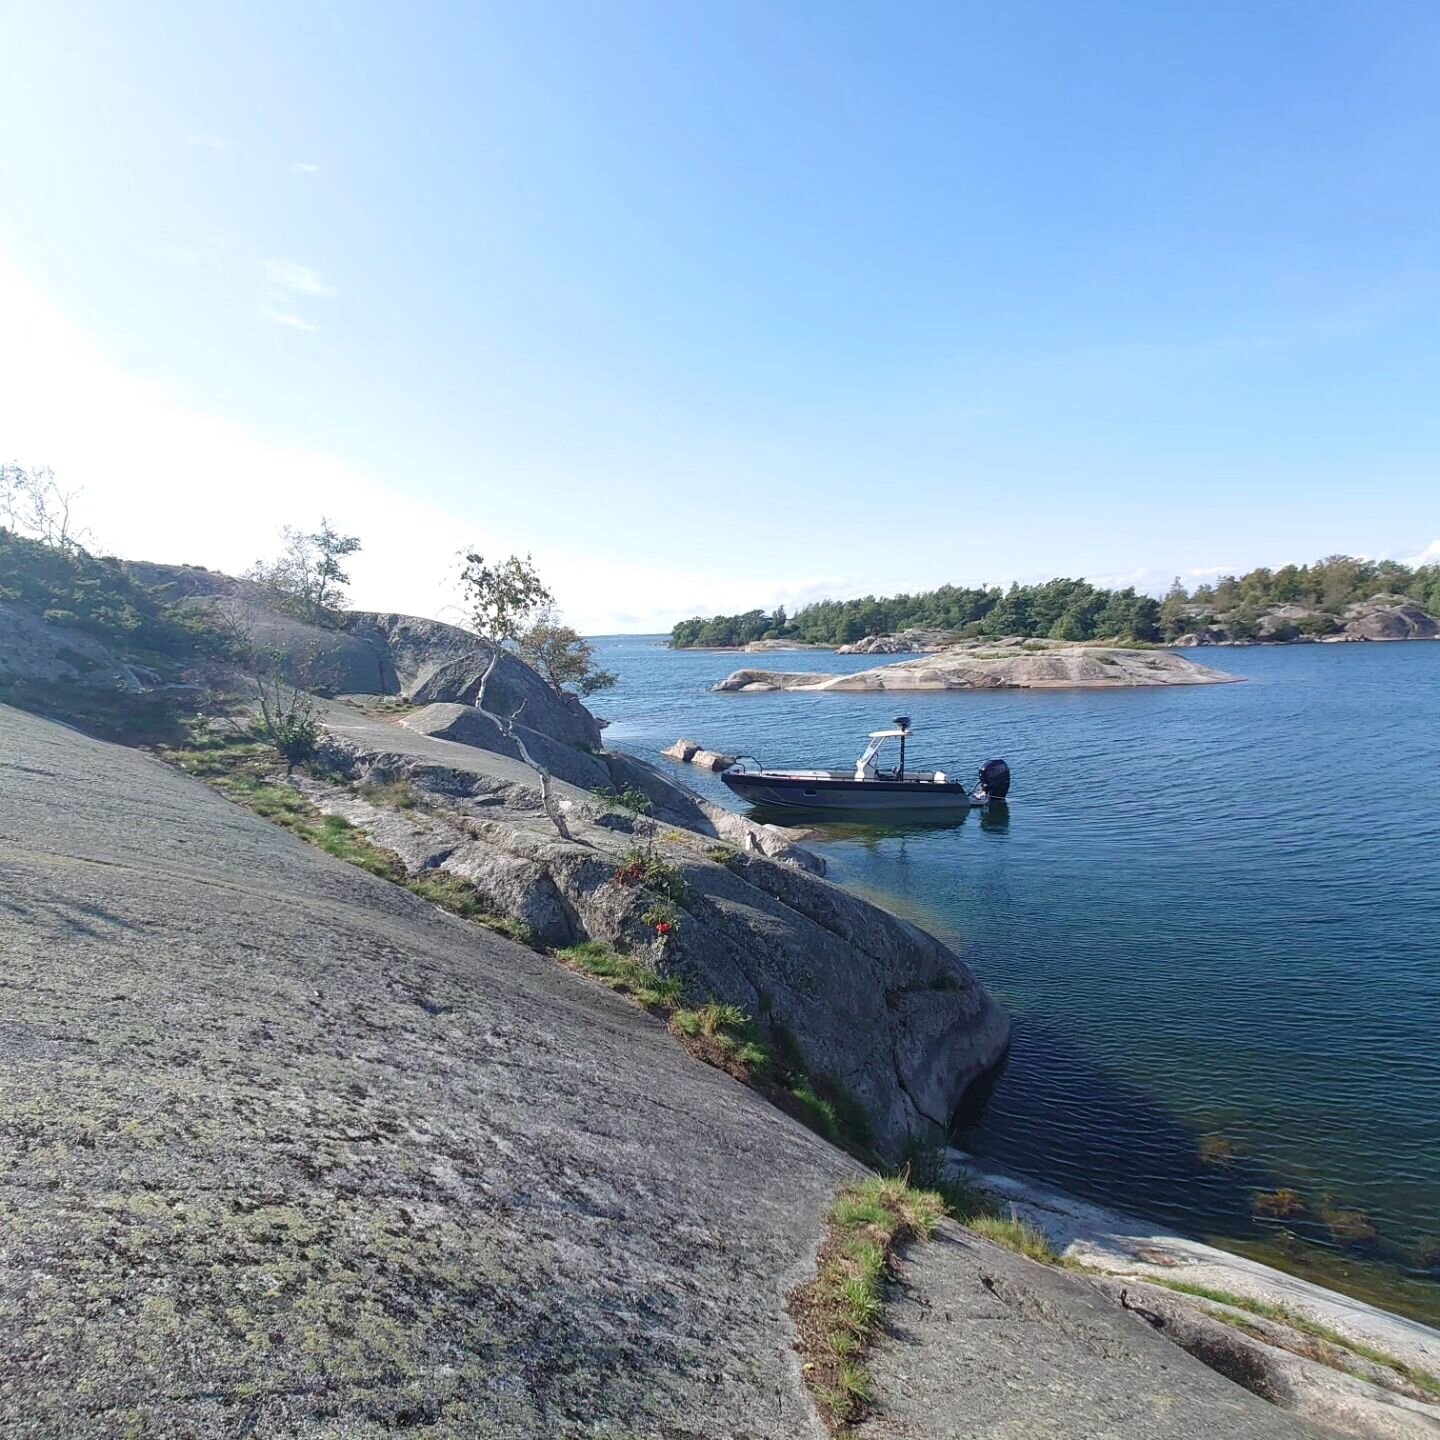 Stockholm archipelago, just rocks and water. Simply beautiful.
#vector75fc #mercuryracing #simradyachting #verado400r